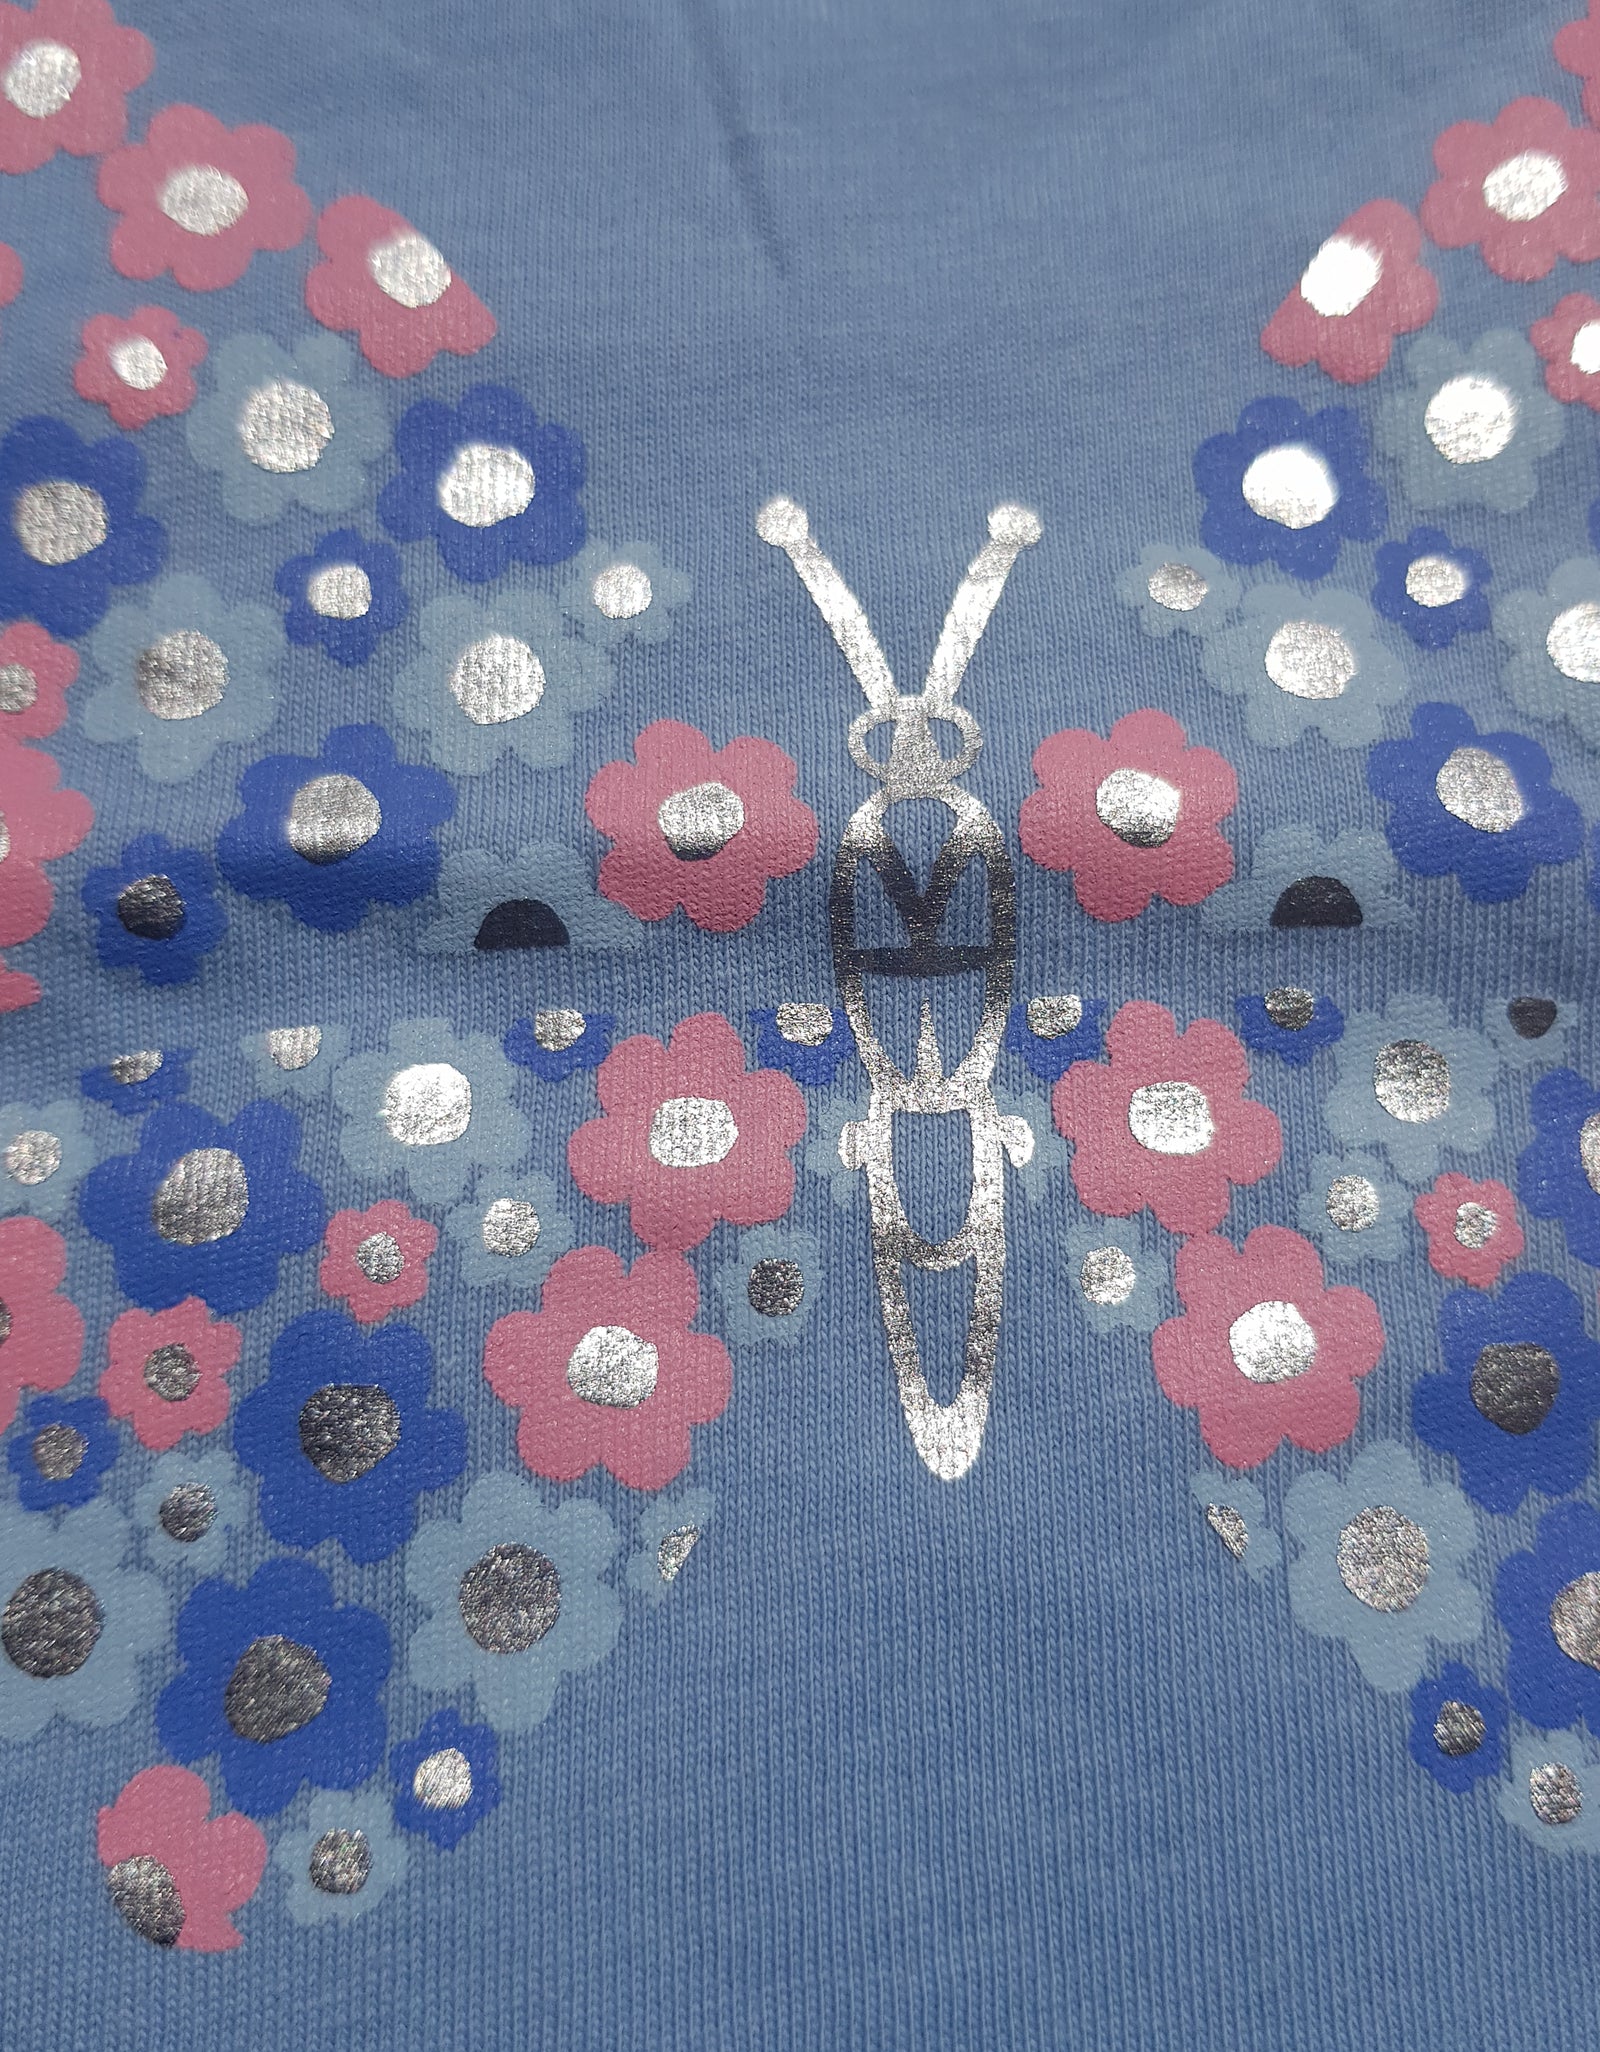 Primark Girls' Butterfly Longsleeve T-Shirt.